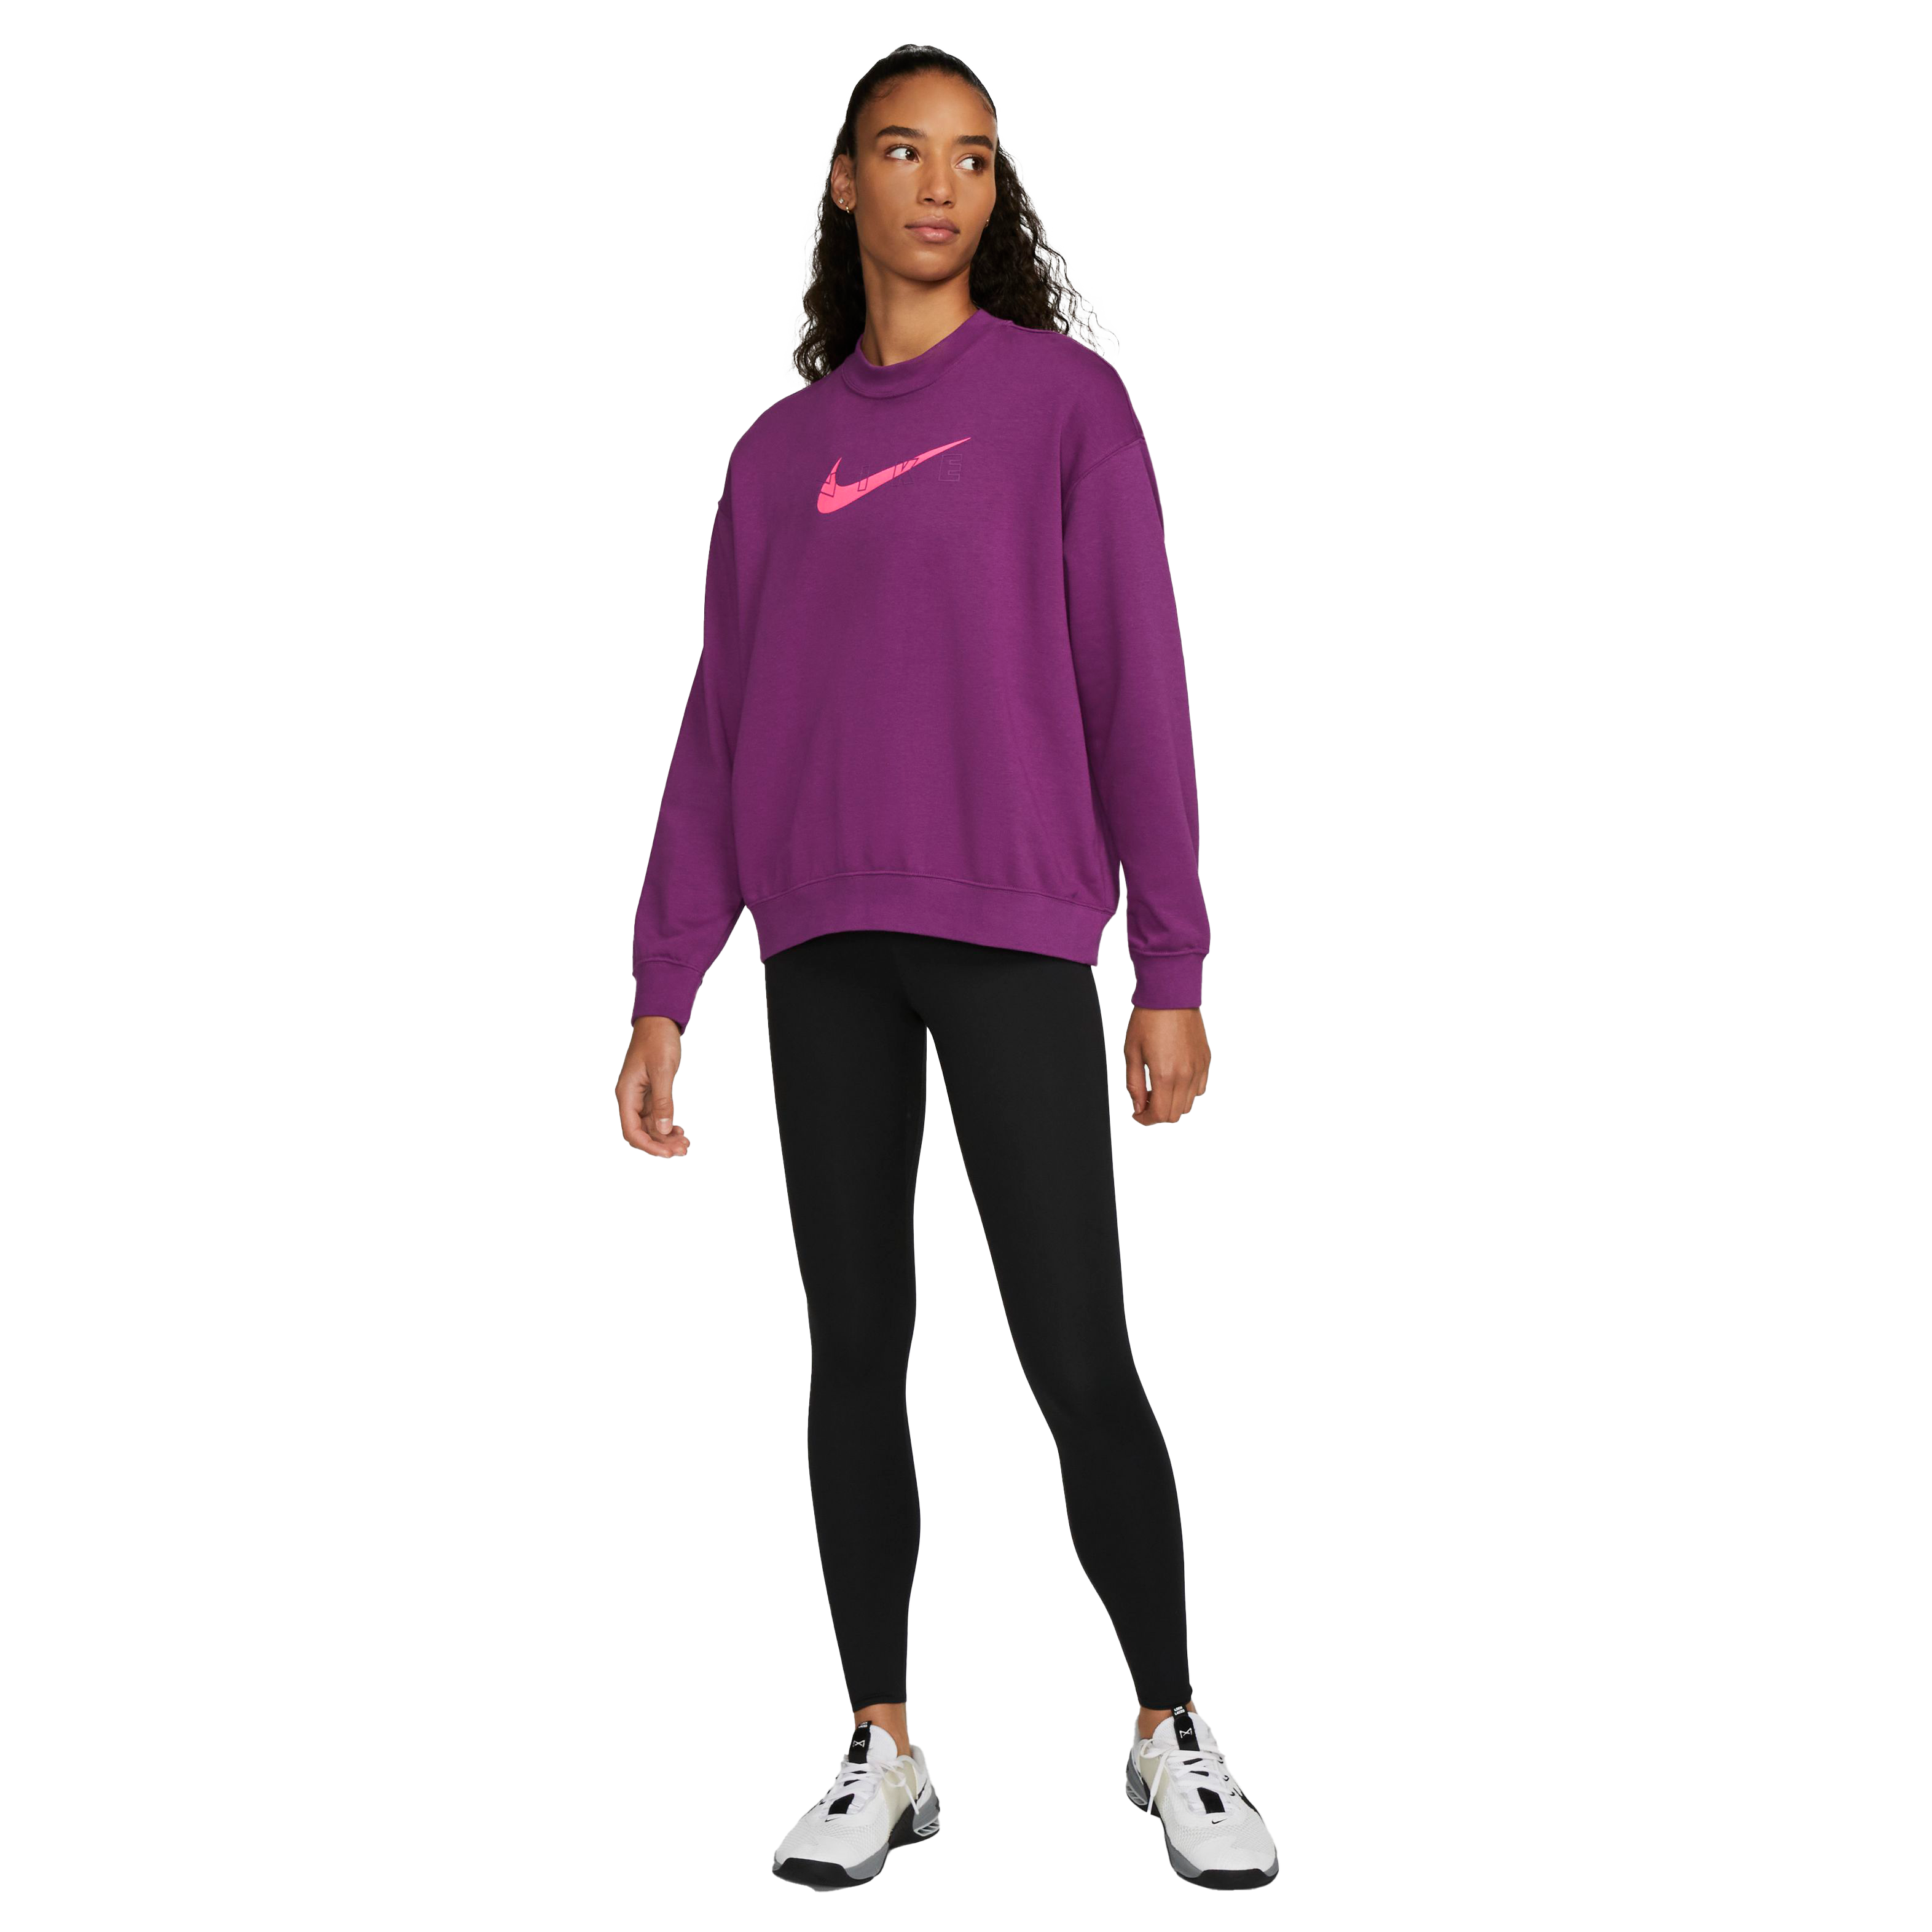 Nike Women's Dri-FIT Get Fit Graphic Training Crewneck Sweatshirt